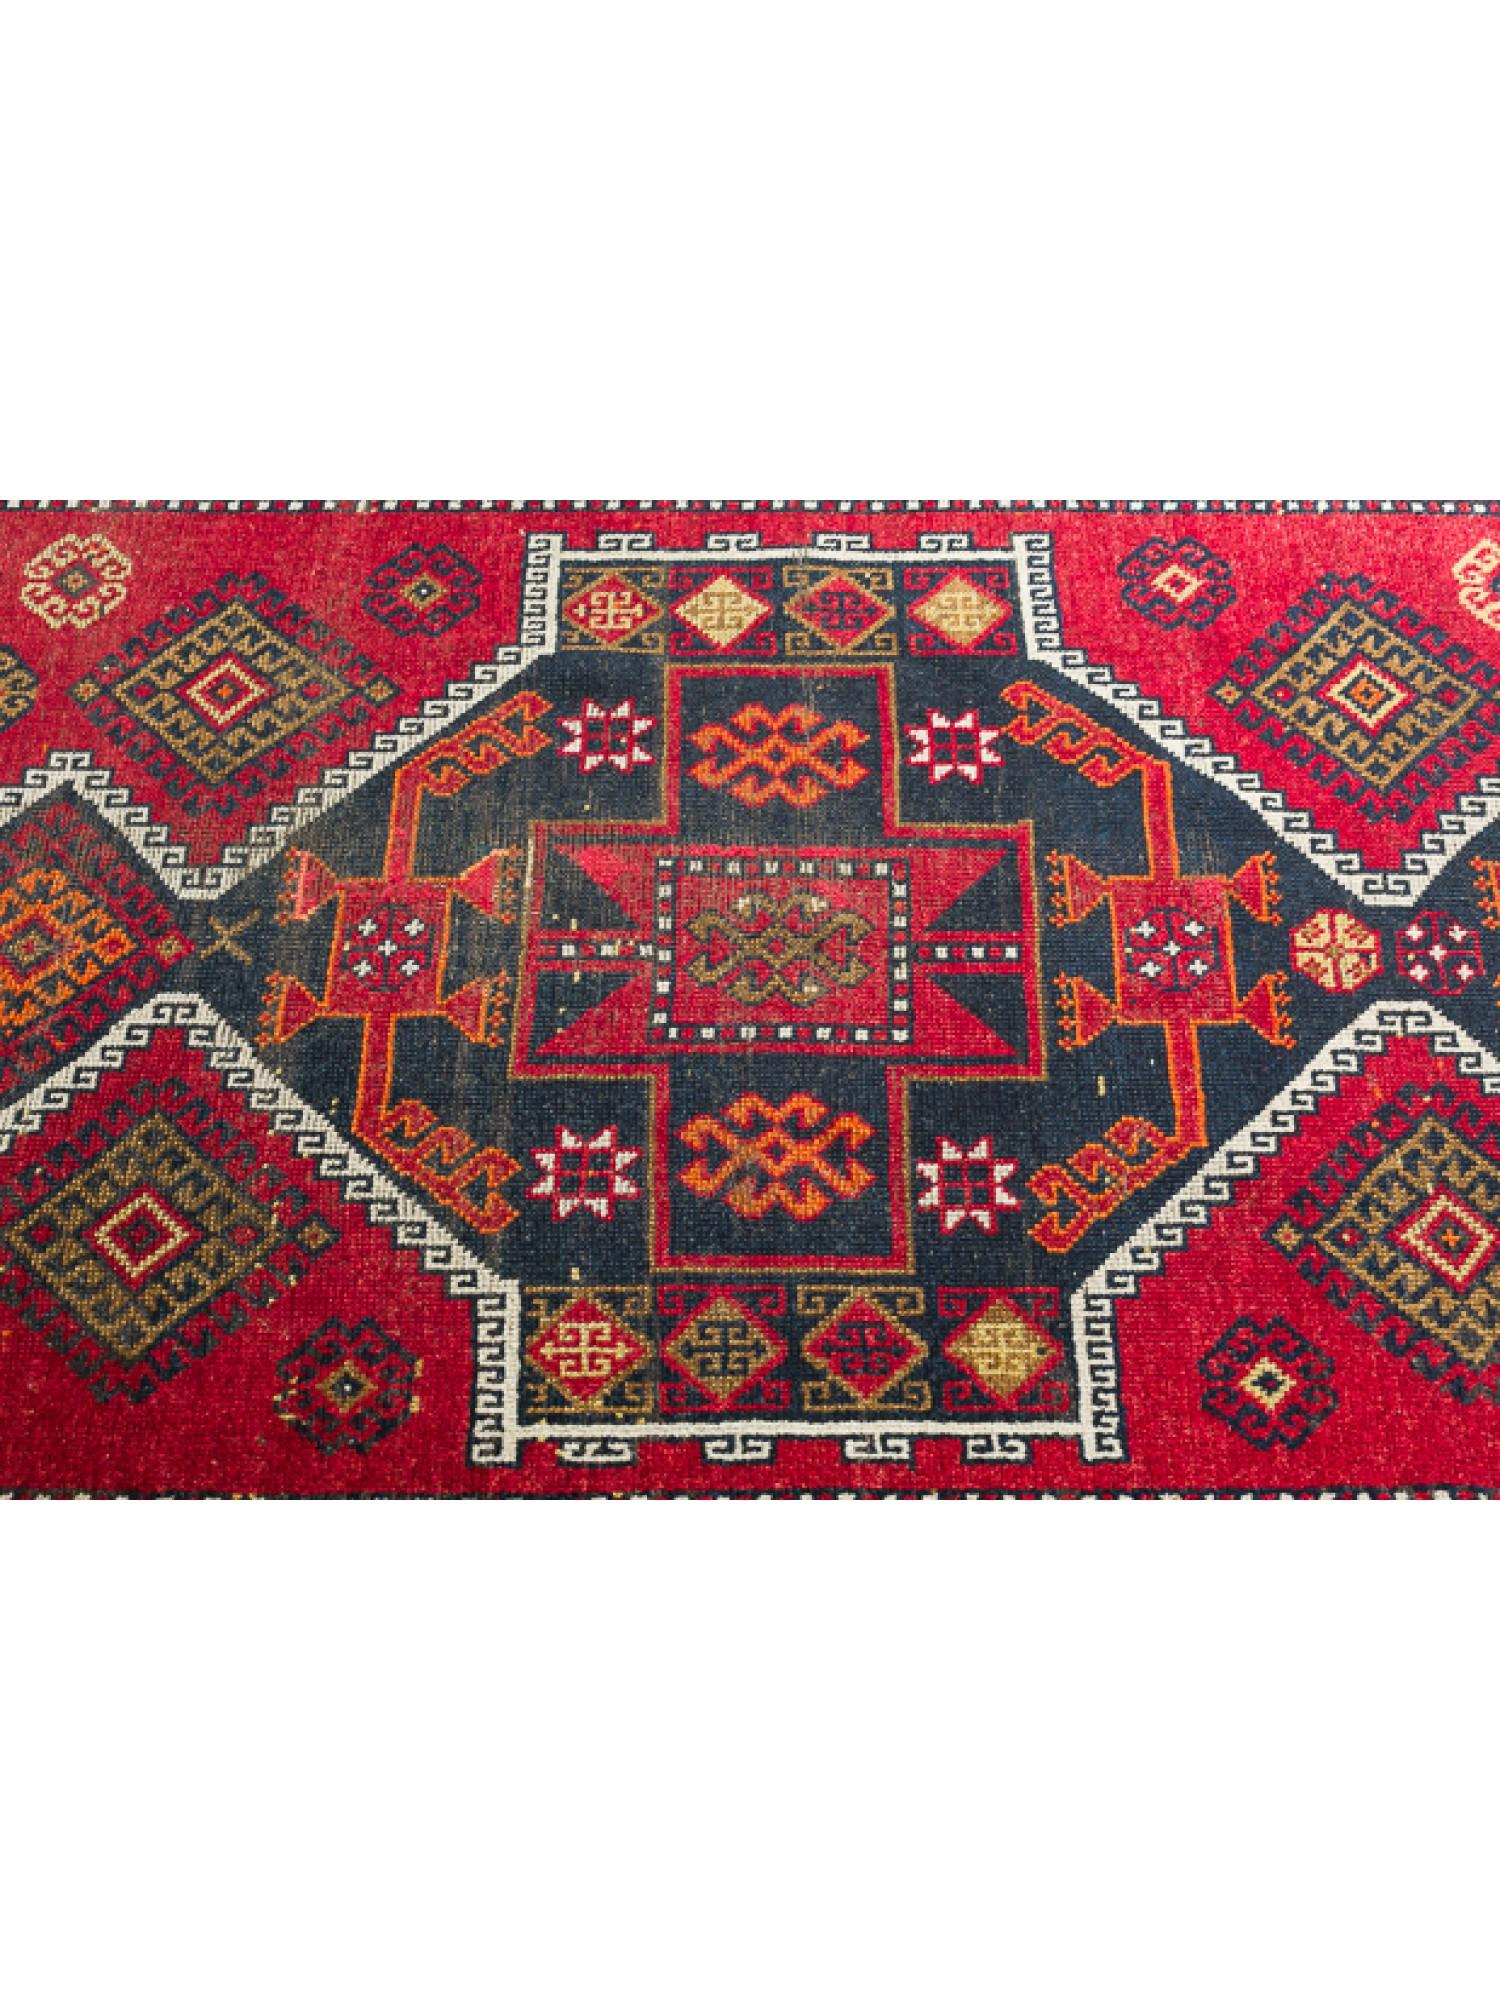 20th Century Antique Kurdish Runner Rug - Eastern Anatolian Turkish Carpet For Sale